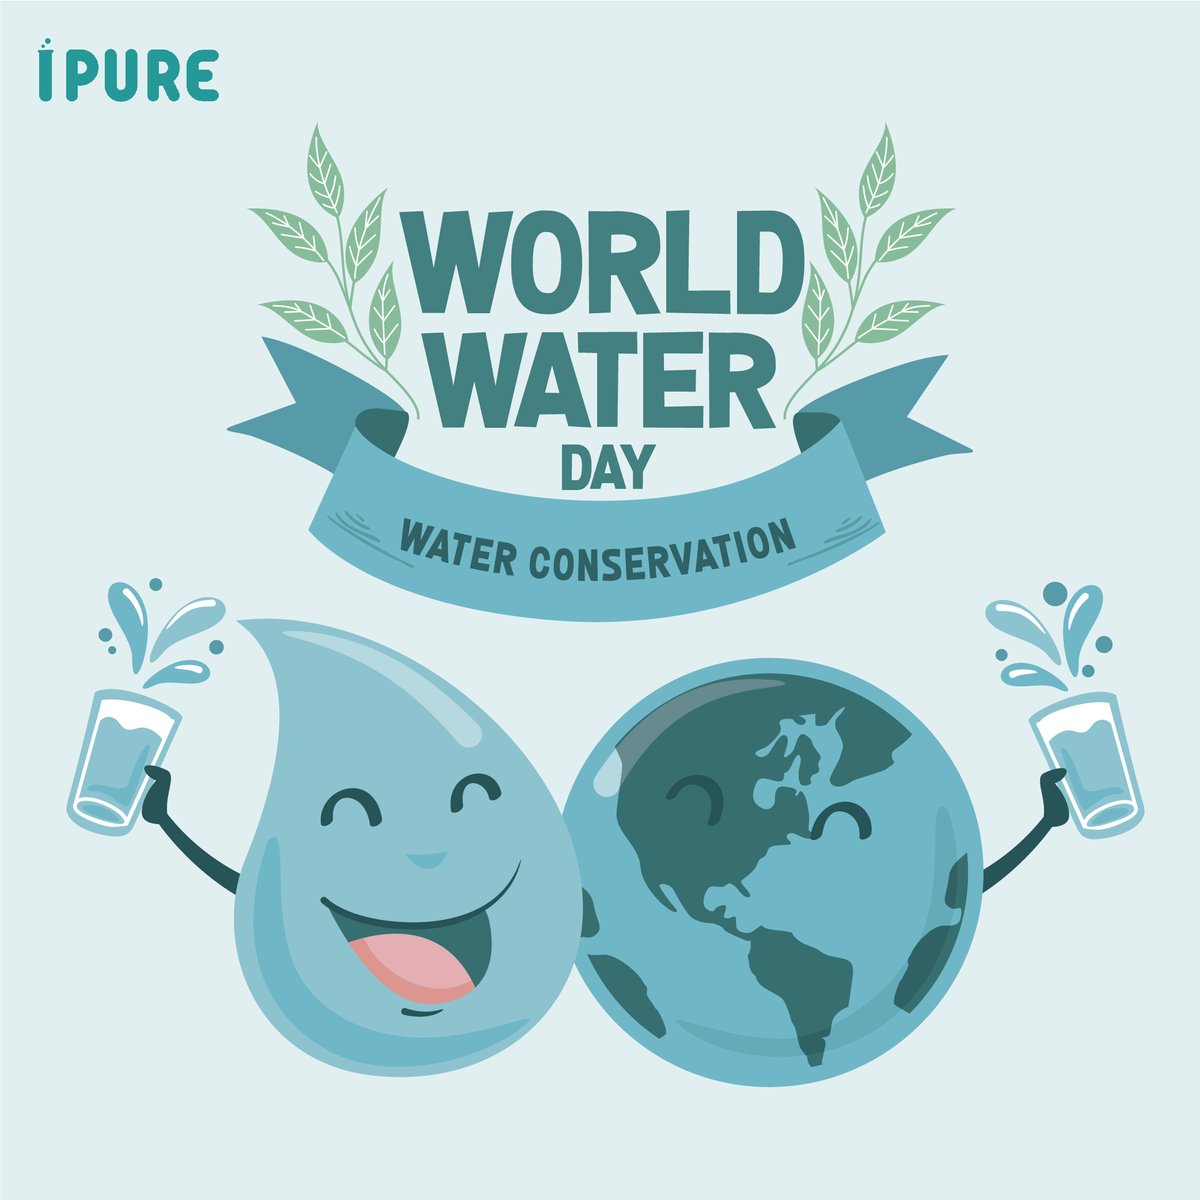 Cherish every drop of liquid. 💧🌍
#ipure #Vape #ipurejuice #eliquid #ejuice #flavor #disposable #vapelife #vapecommunity #ecig #ukvia #oem #vapeindustry #vapenation #vapeon #vapelove #vapeadvocacy #worldwaterday #waterconservation